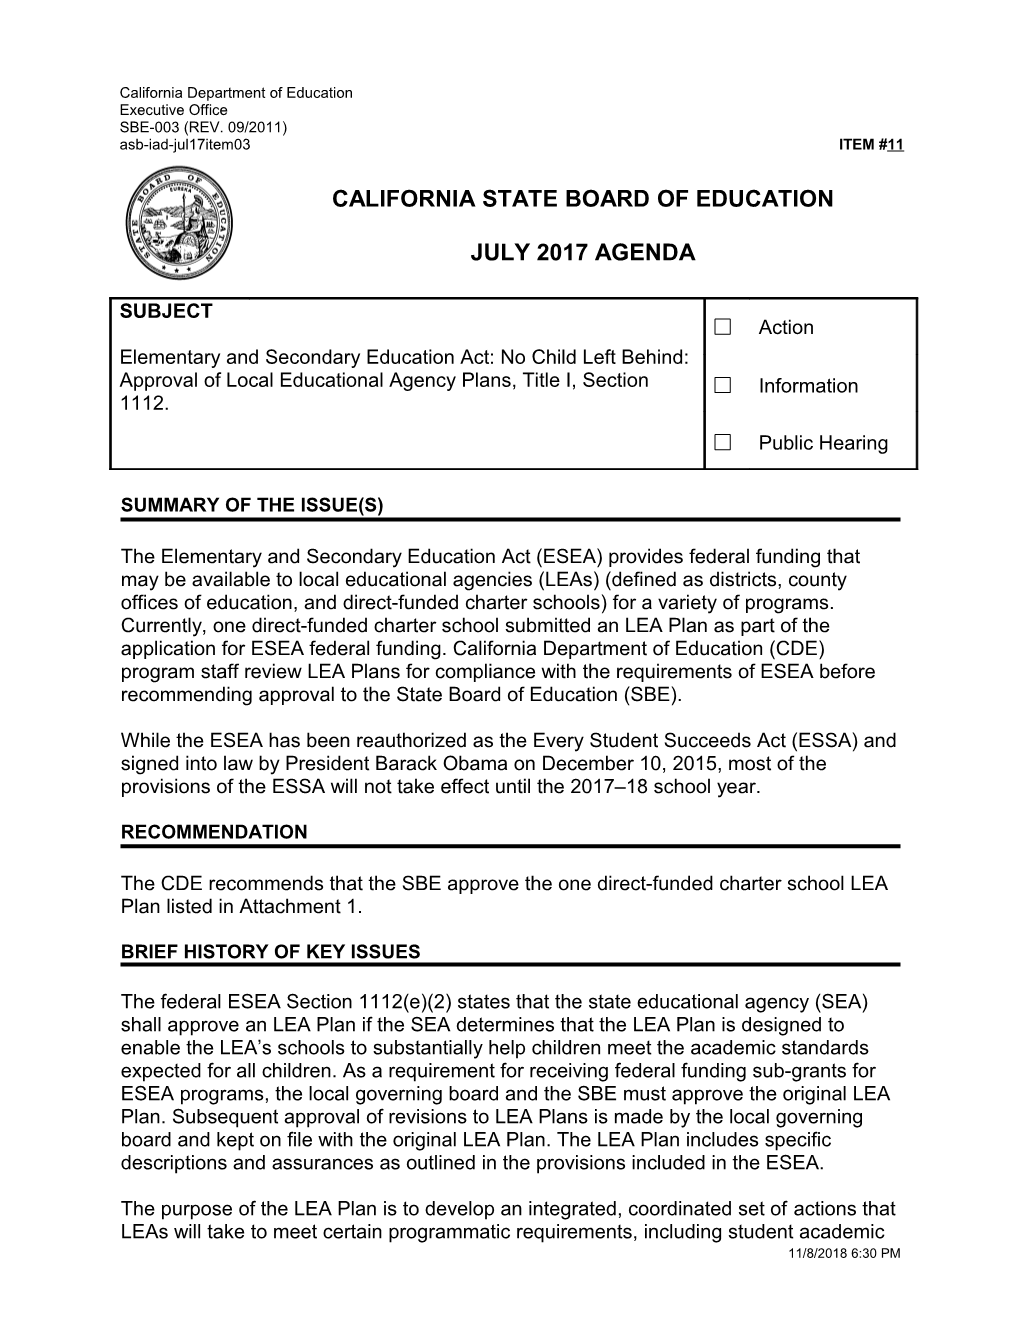 July 2017 Agenda Item 11 - Meeting Agendas (CA State Board of Education)